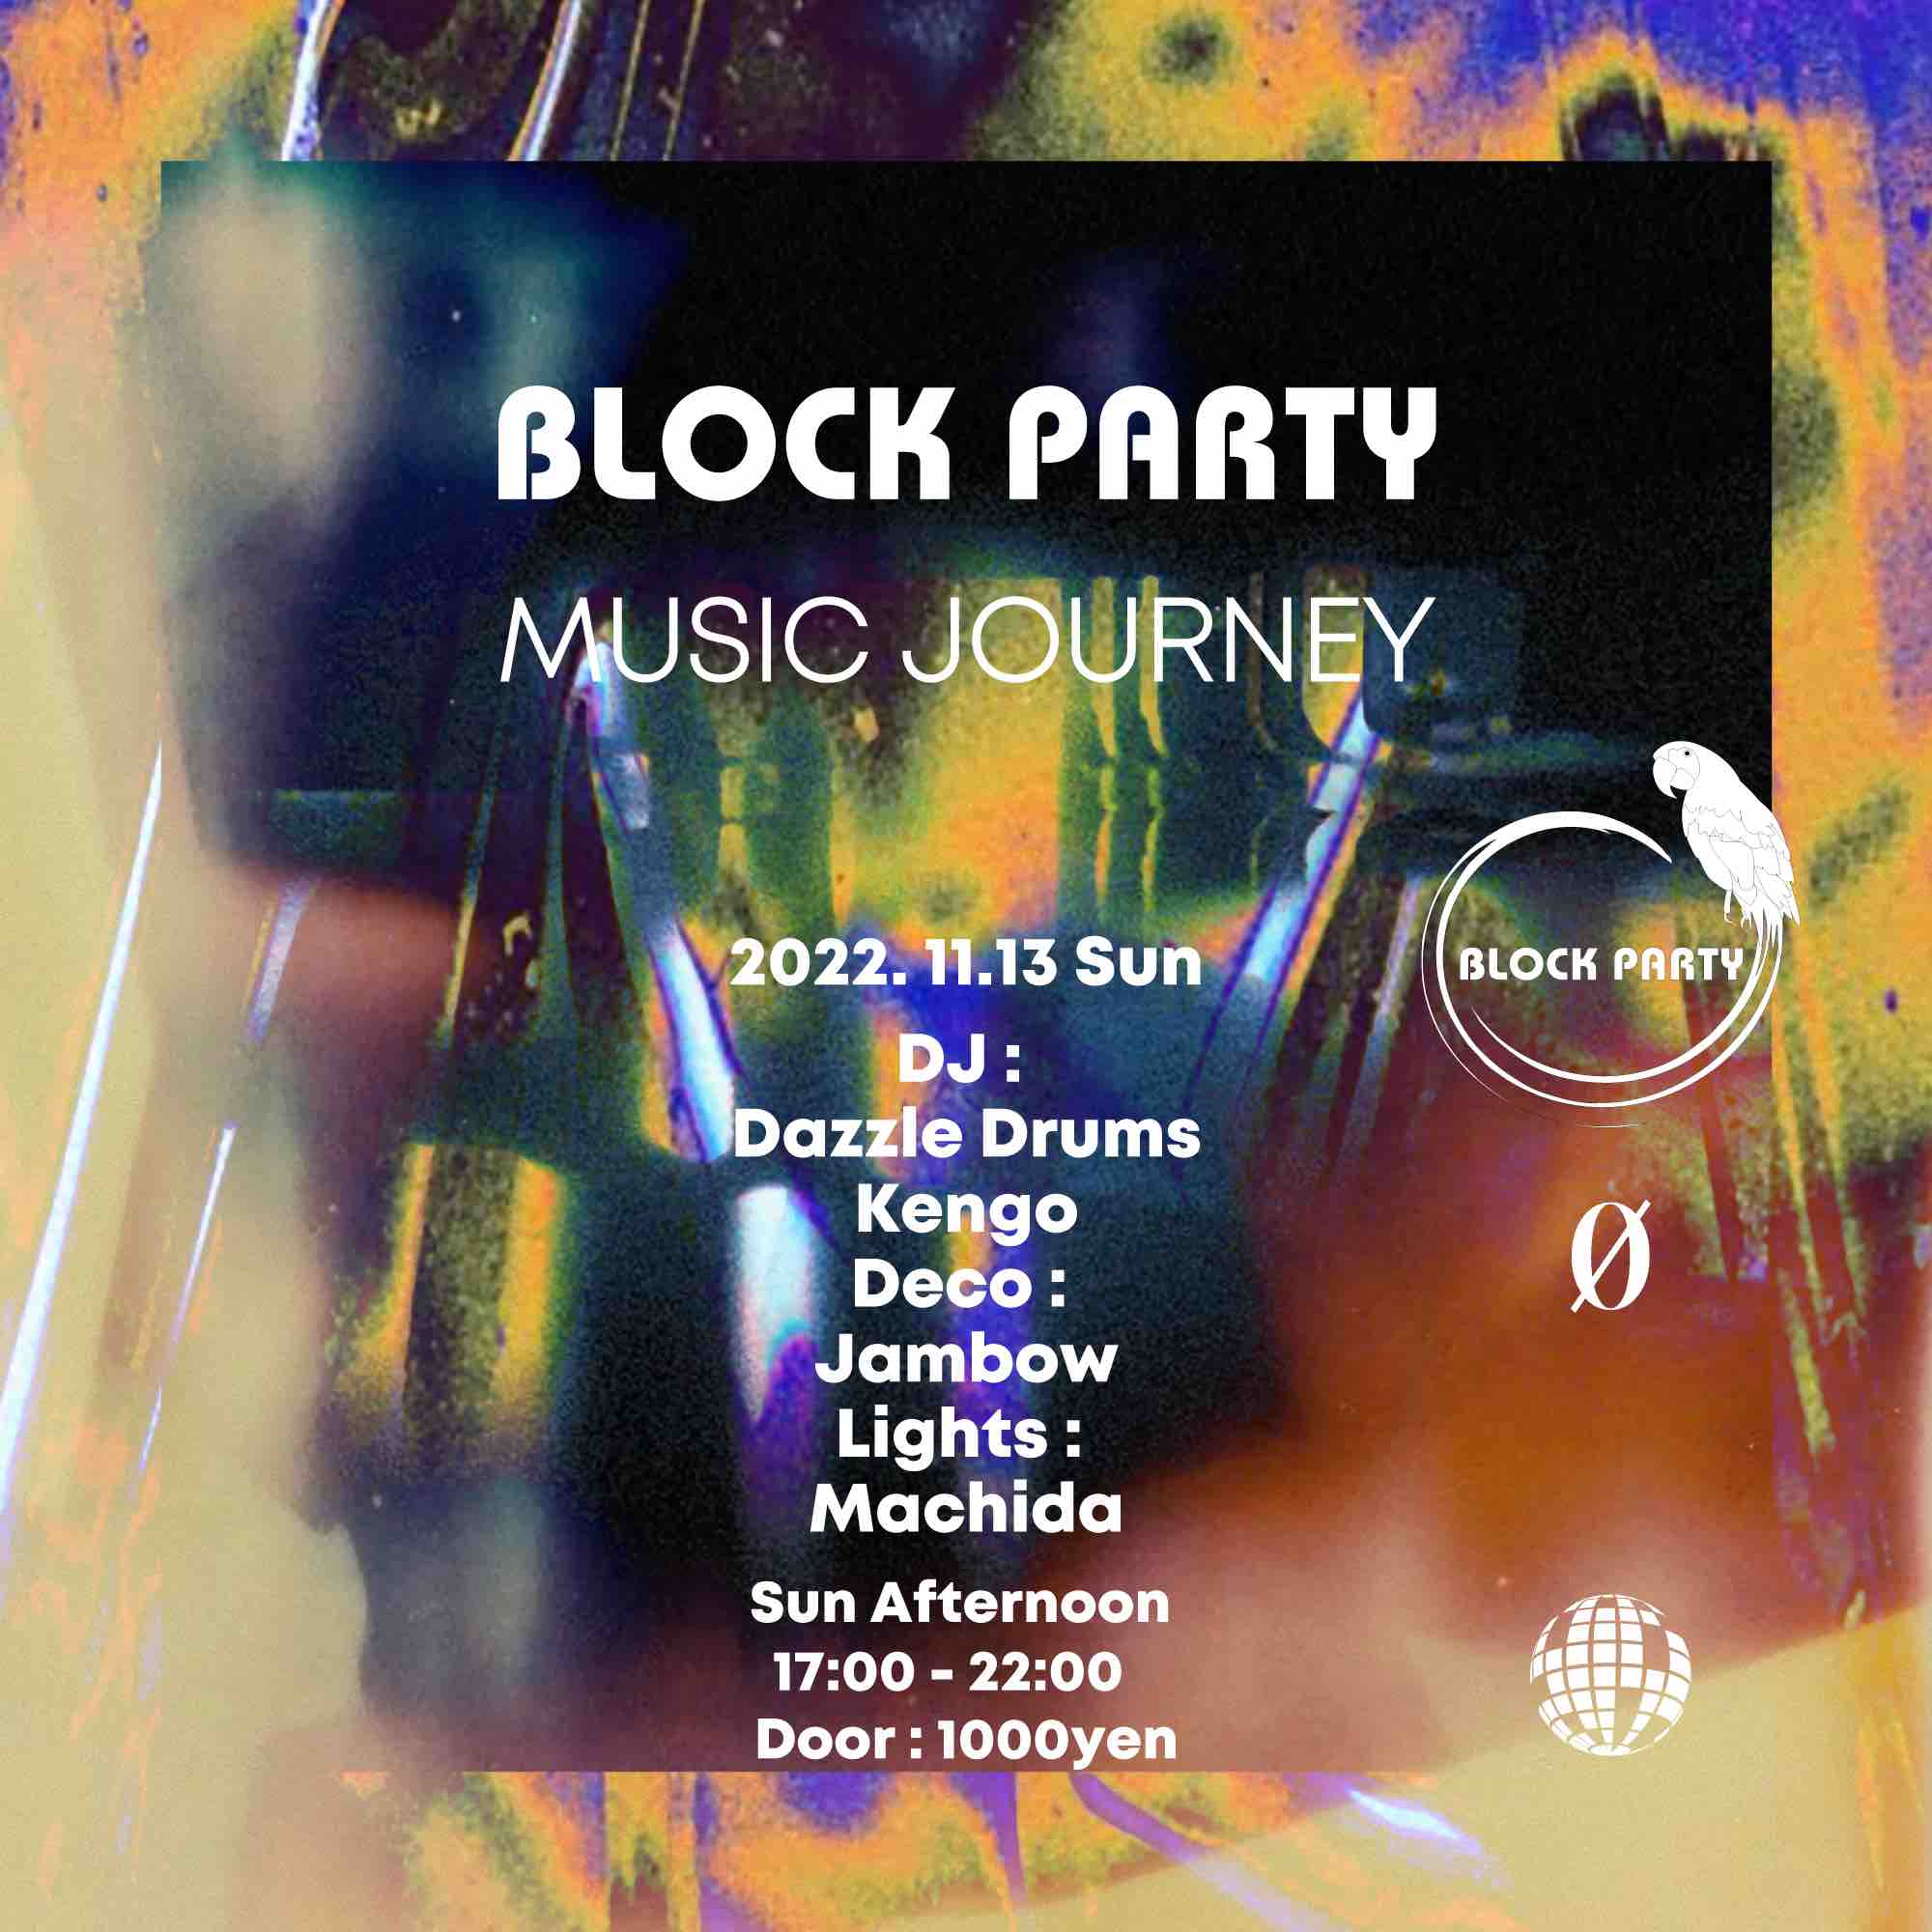 11.13.22 (Sun Afternoon) Block Party “Music Journey” @ 0 Zero